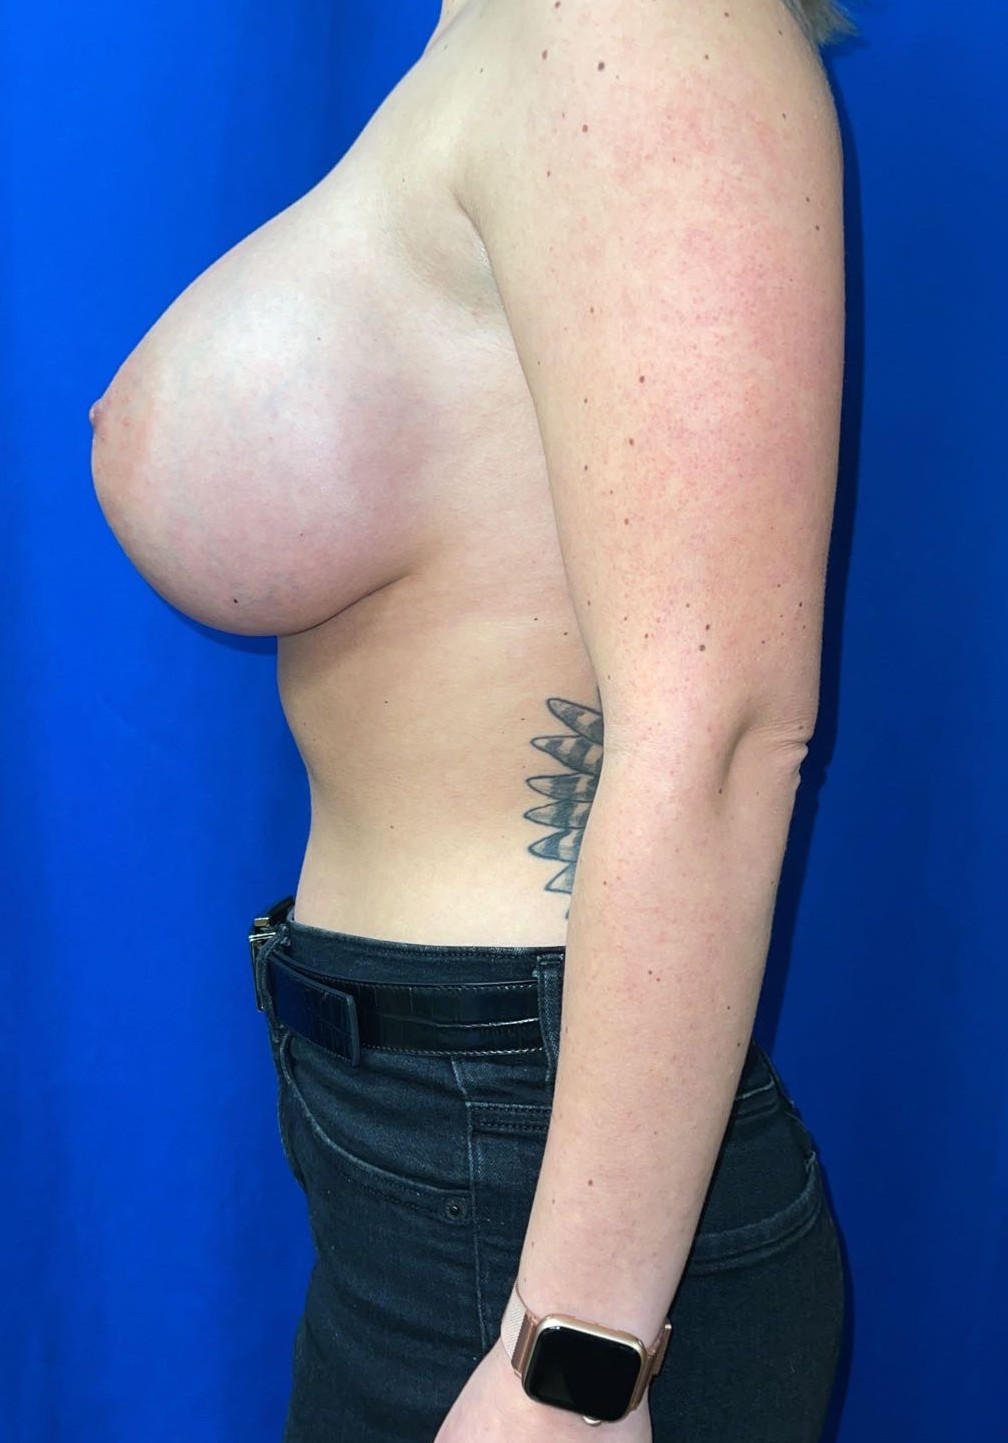 Breast Augmentation Patient Photo - Case 3643 - after view